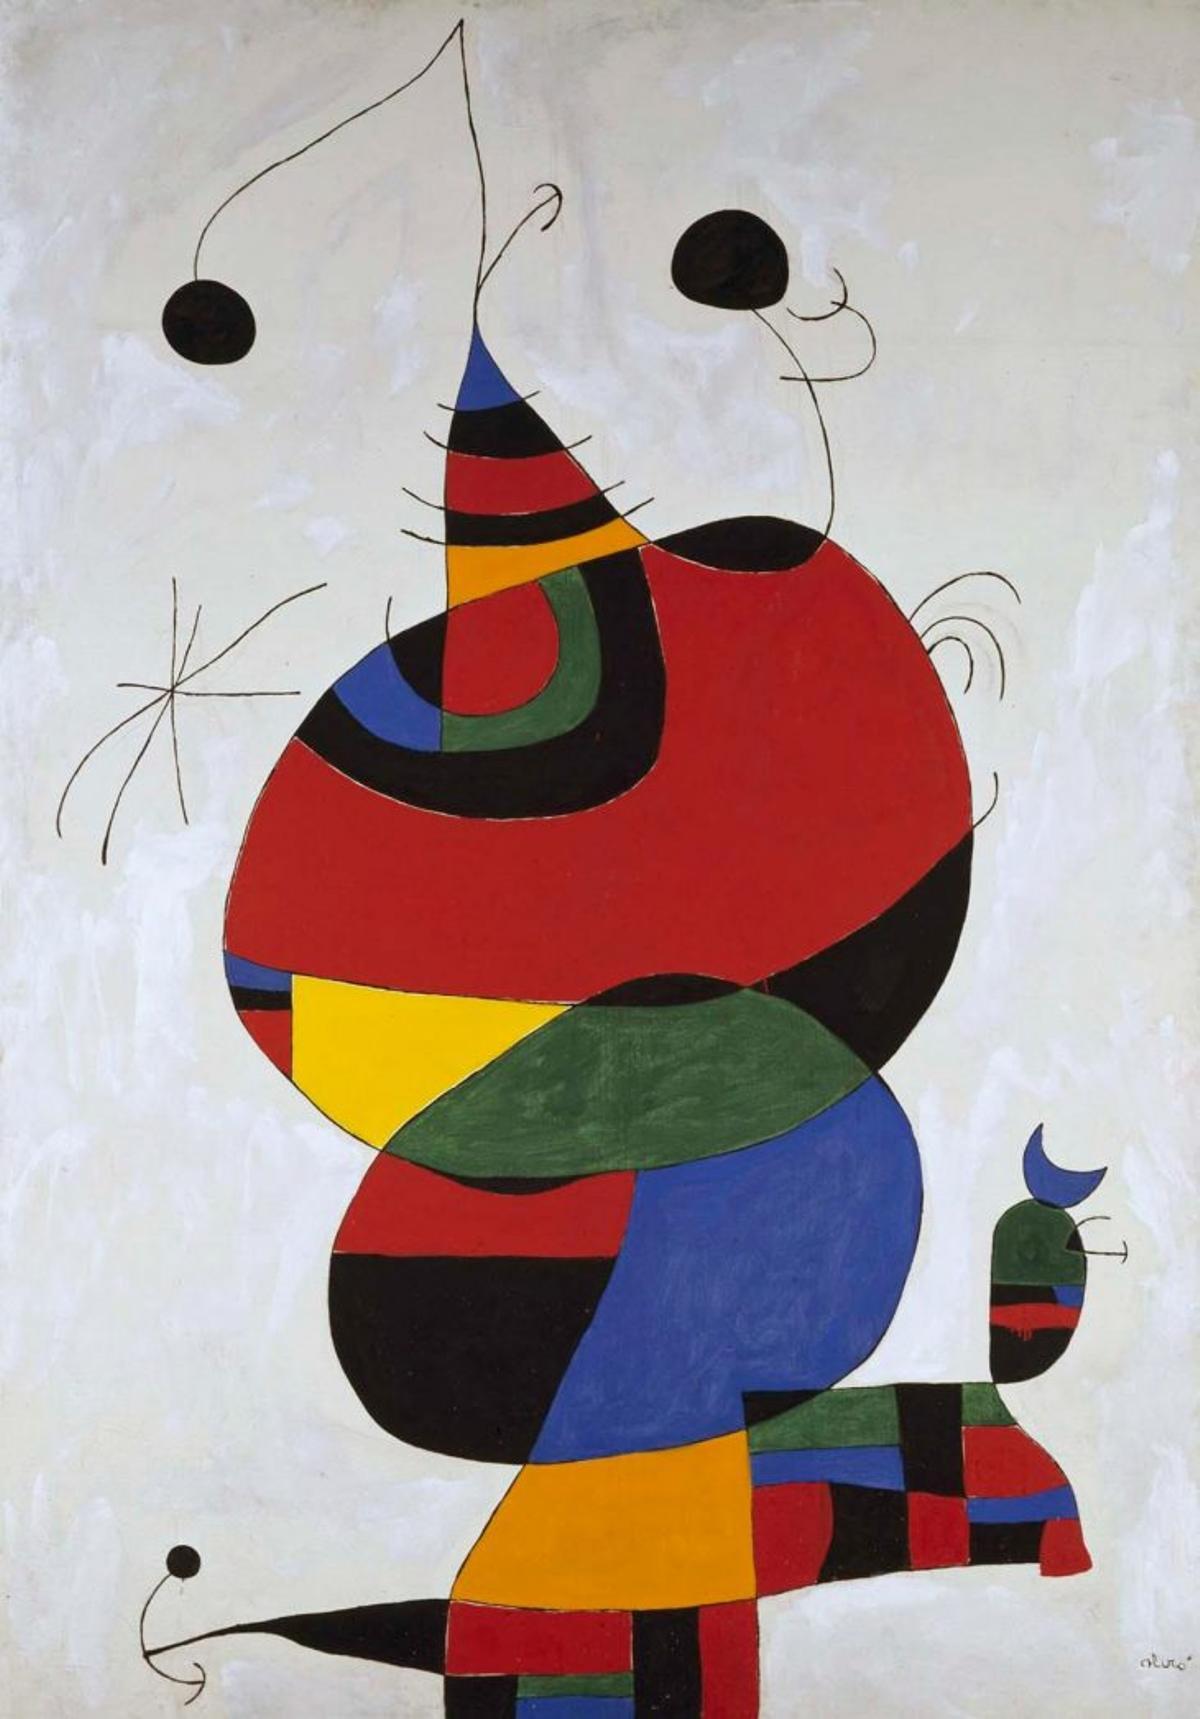 Lienzo de Miró en homenaje a Picasso